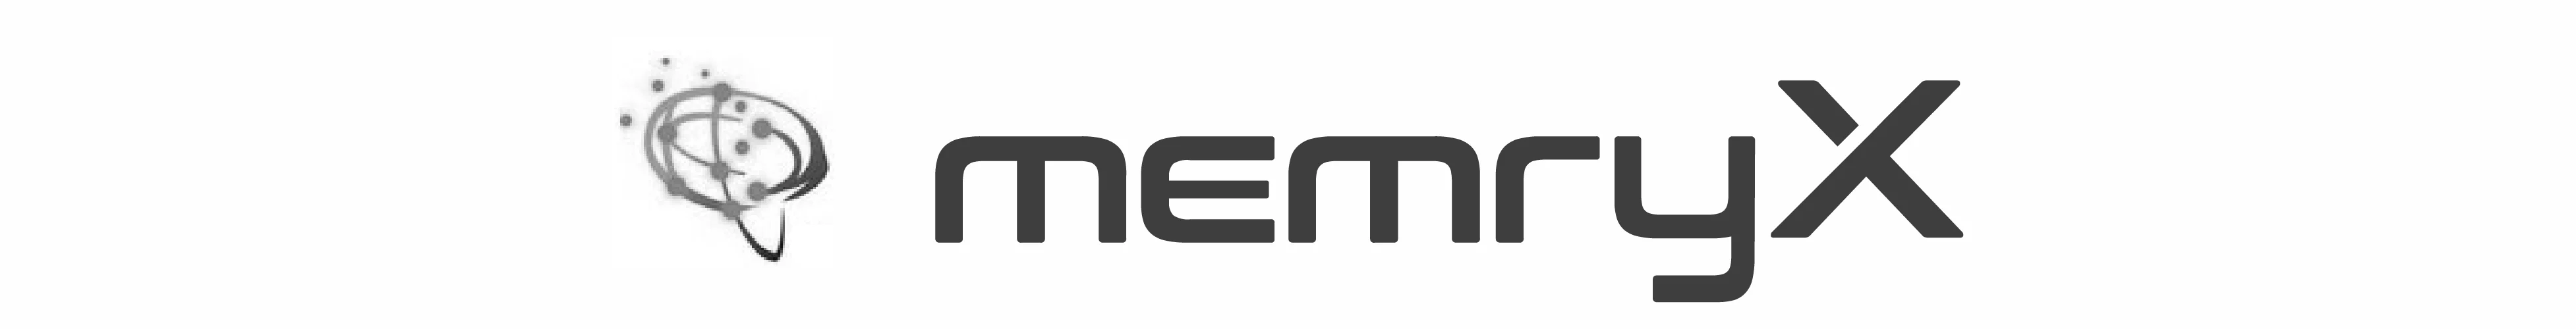 MemryX_logo